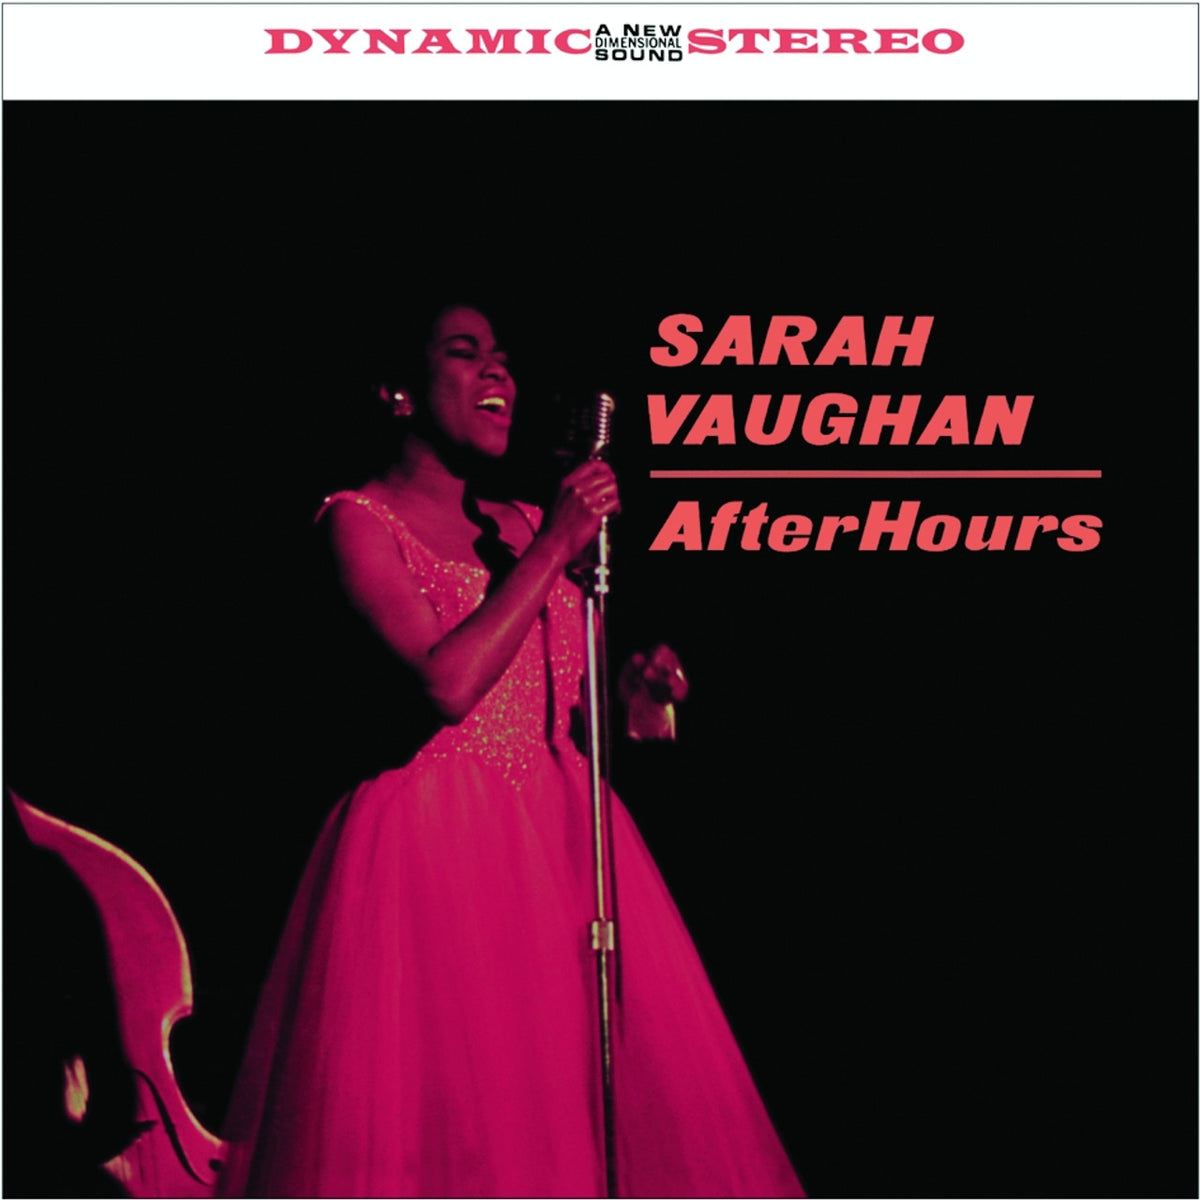 Sarah Vaughan - After Hours - PPANSR52070